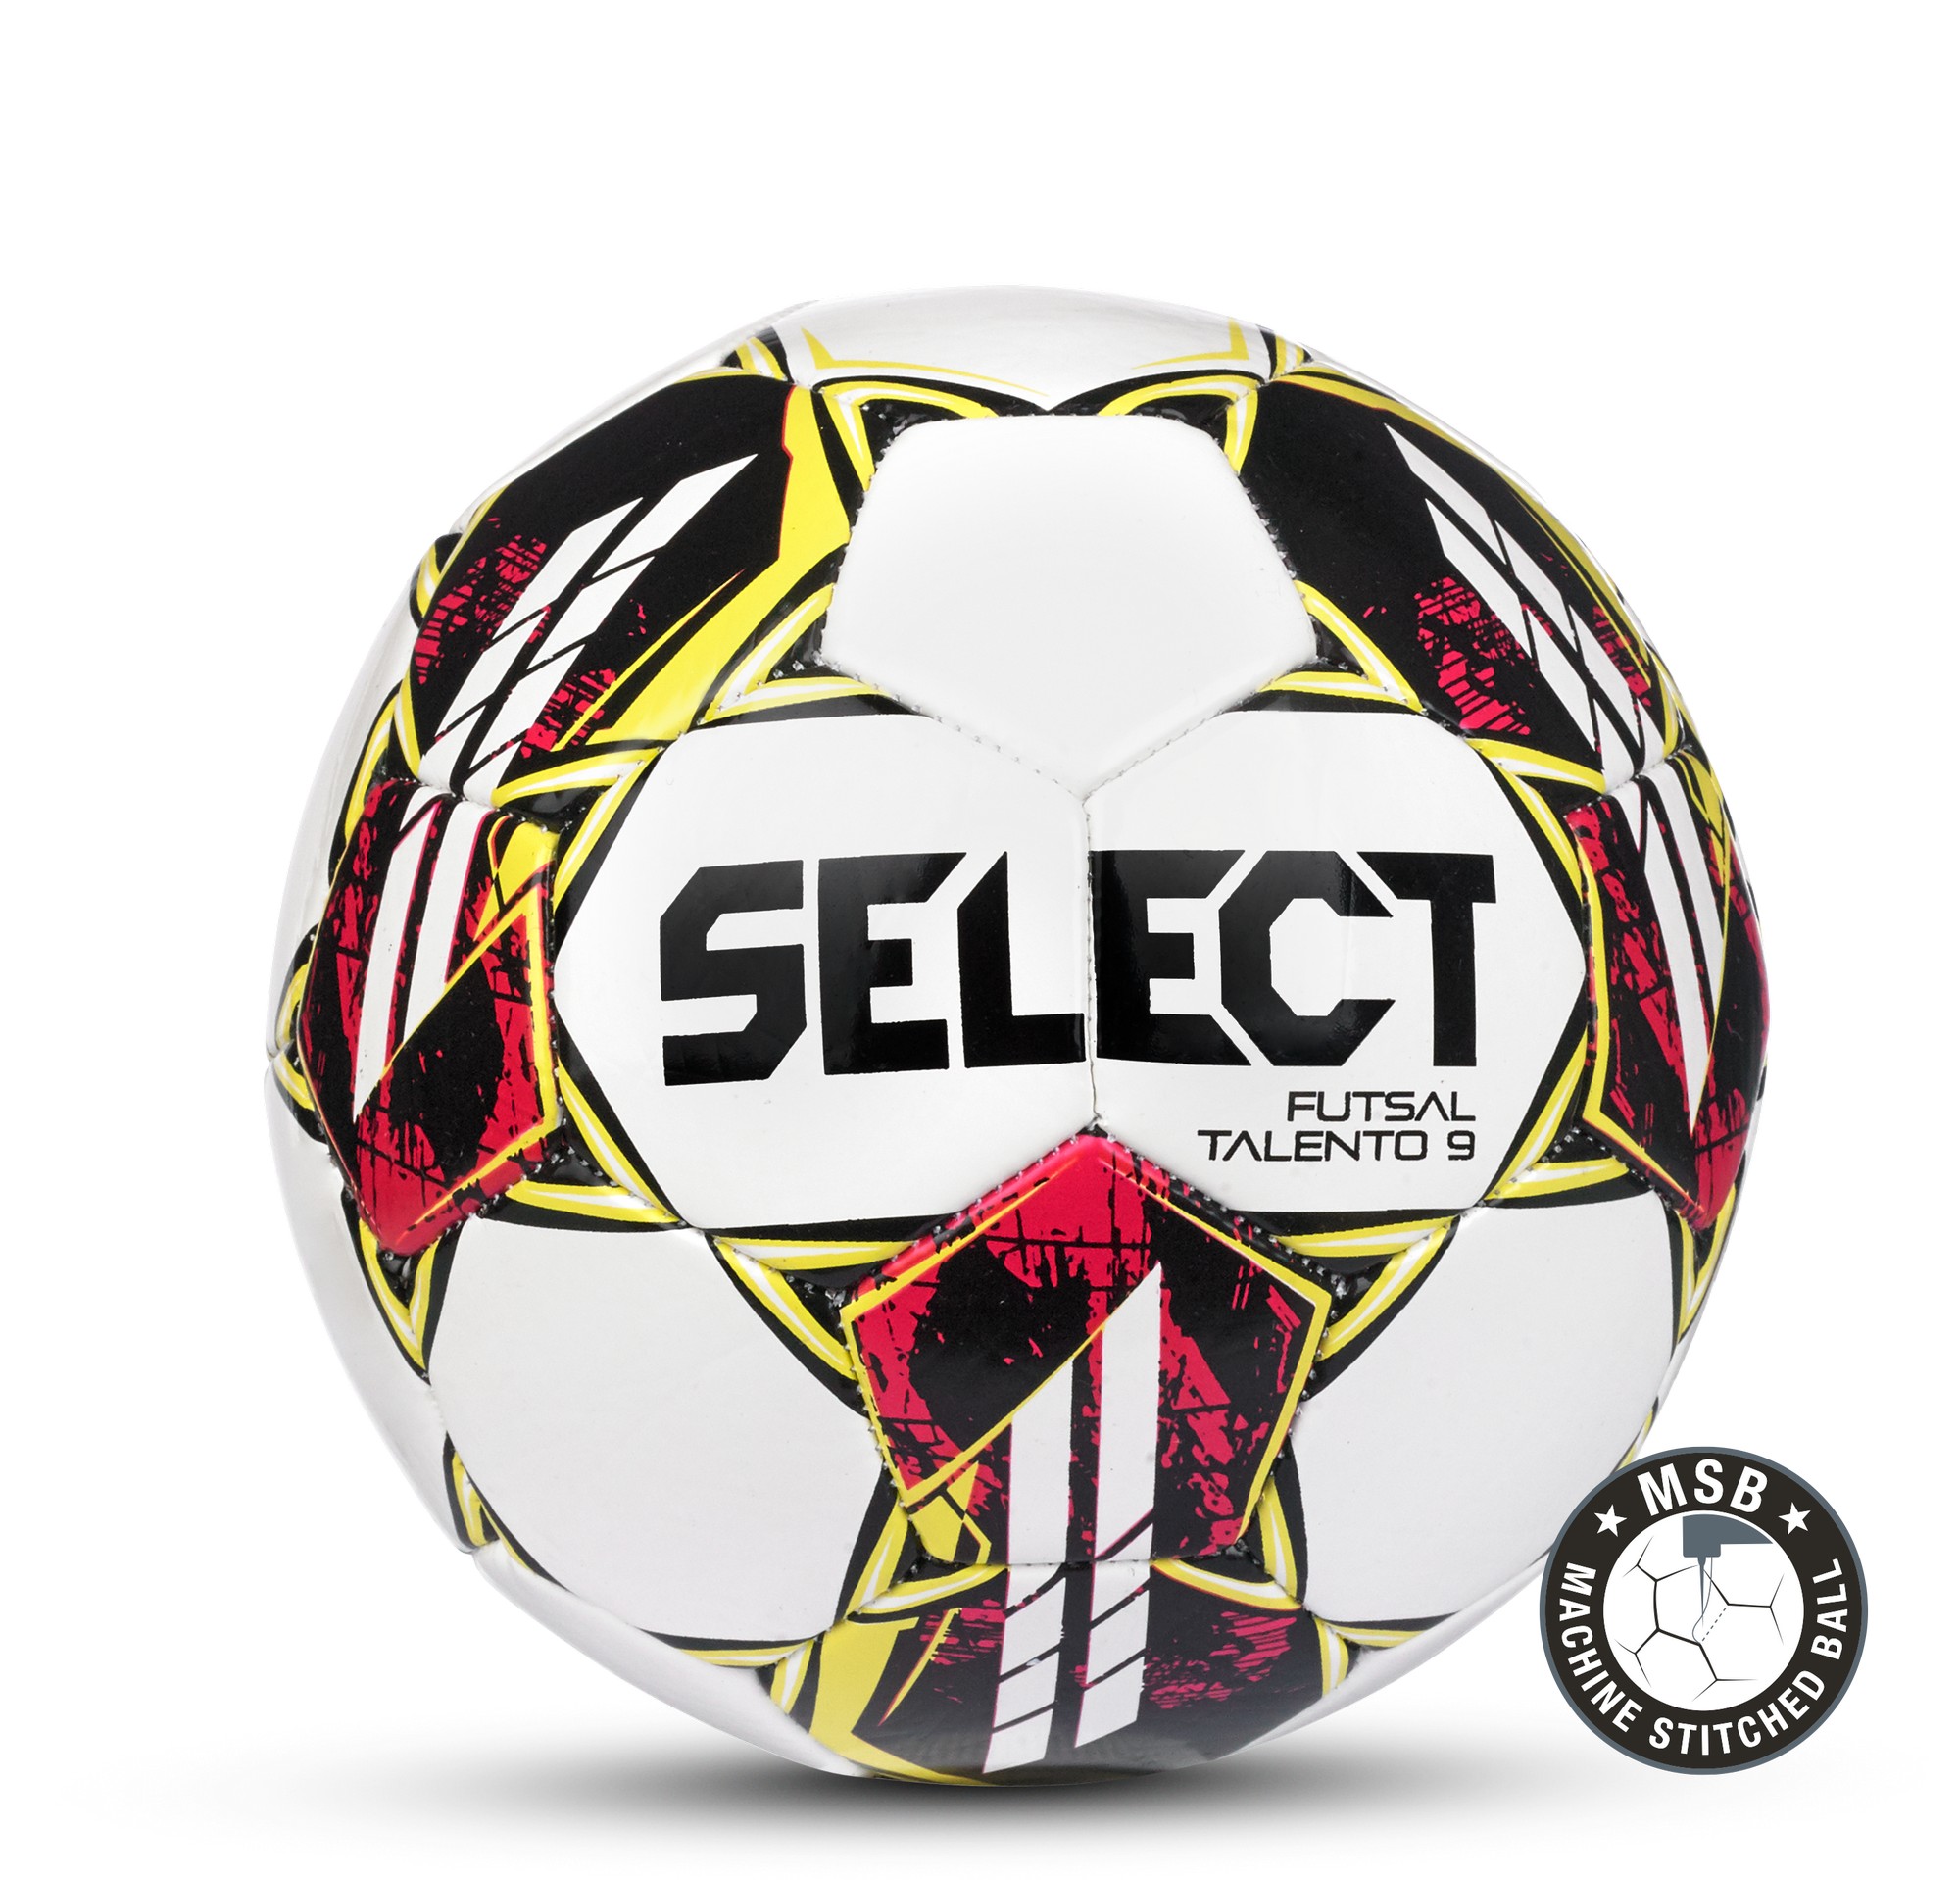 Футзальный мяч Select Futsal Talento 9 v22 1060460005 2000_1918